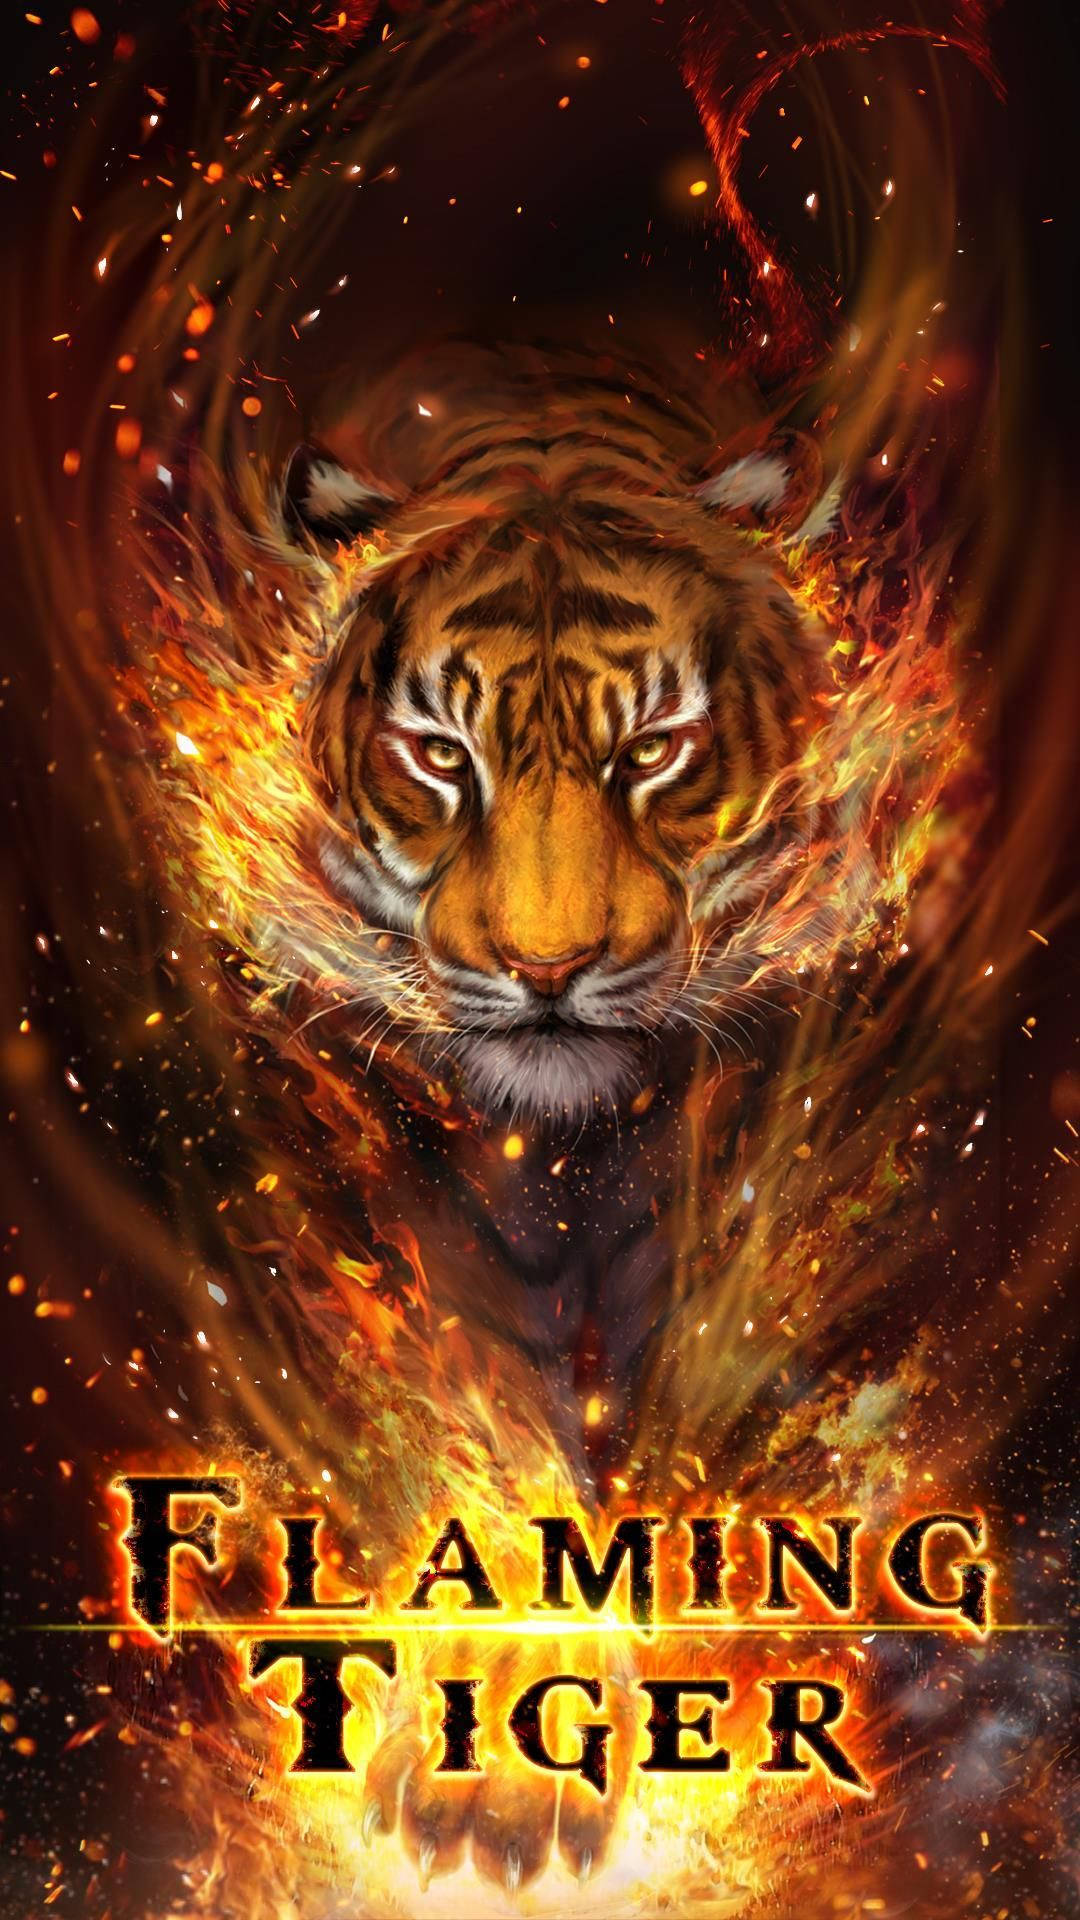 Cool Flaming Tiger Poster Wallpaper